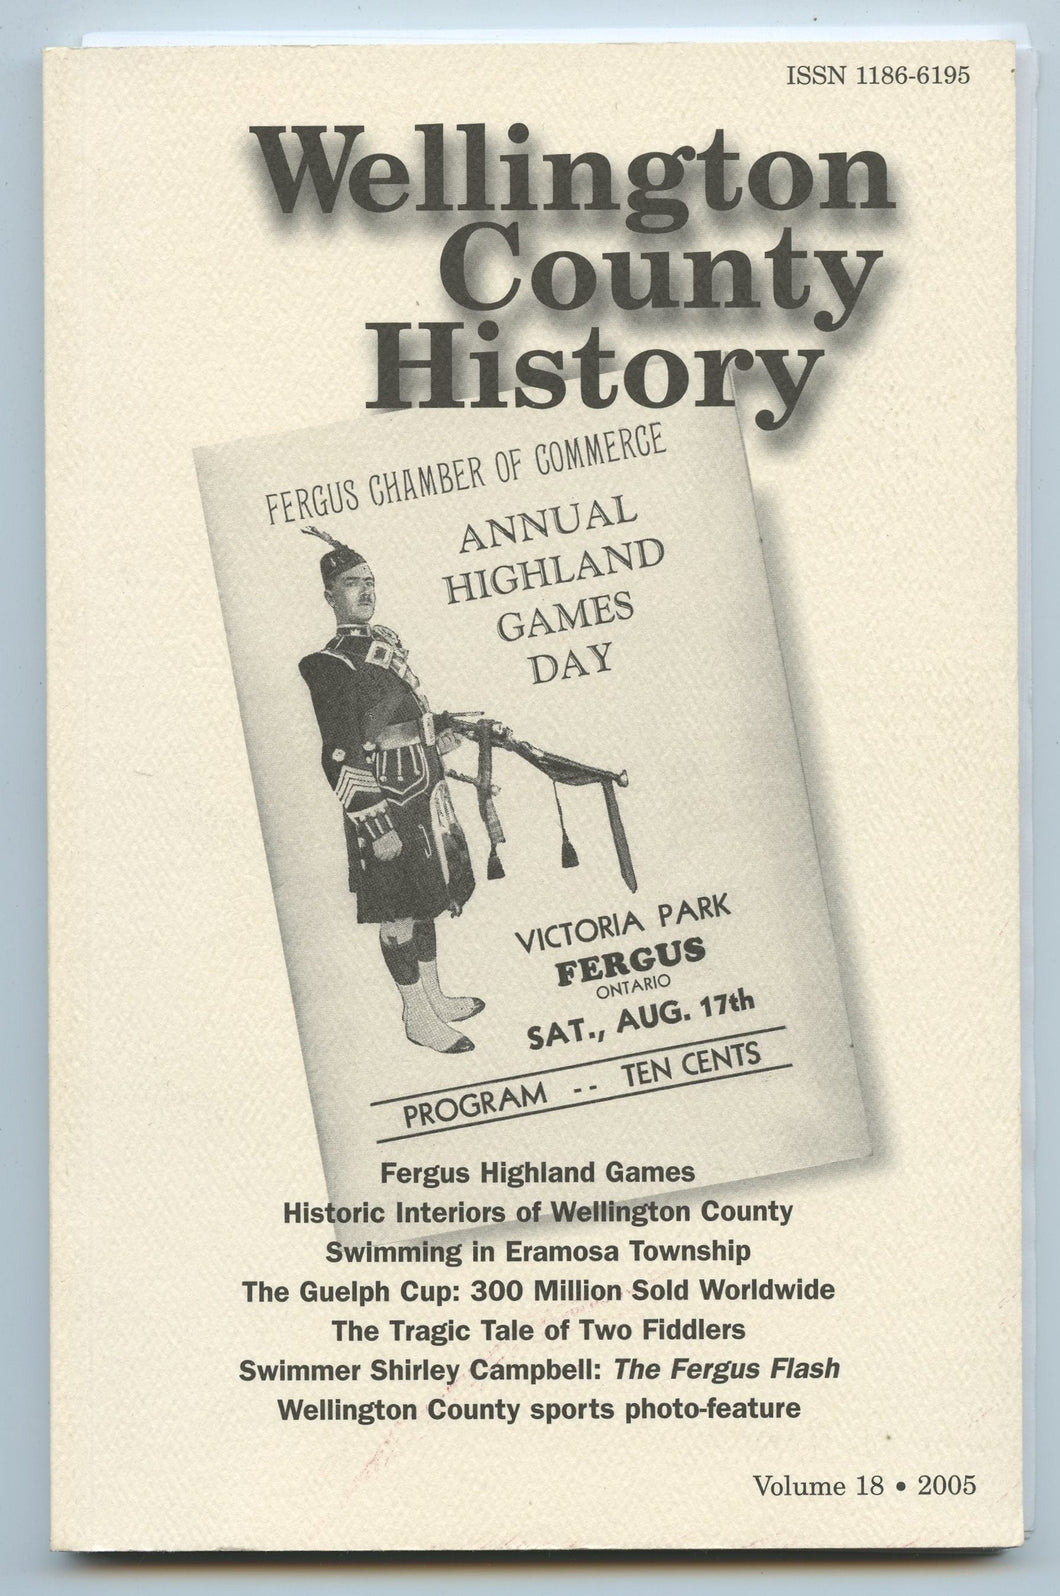 Wellington County History Vol. 18 2005